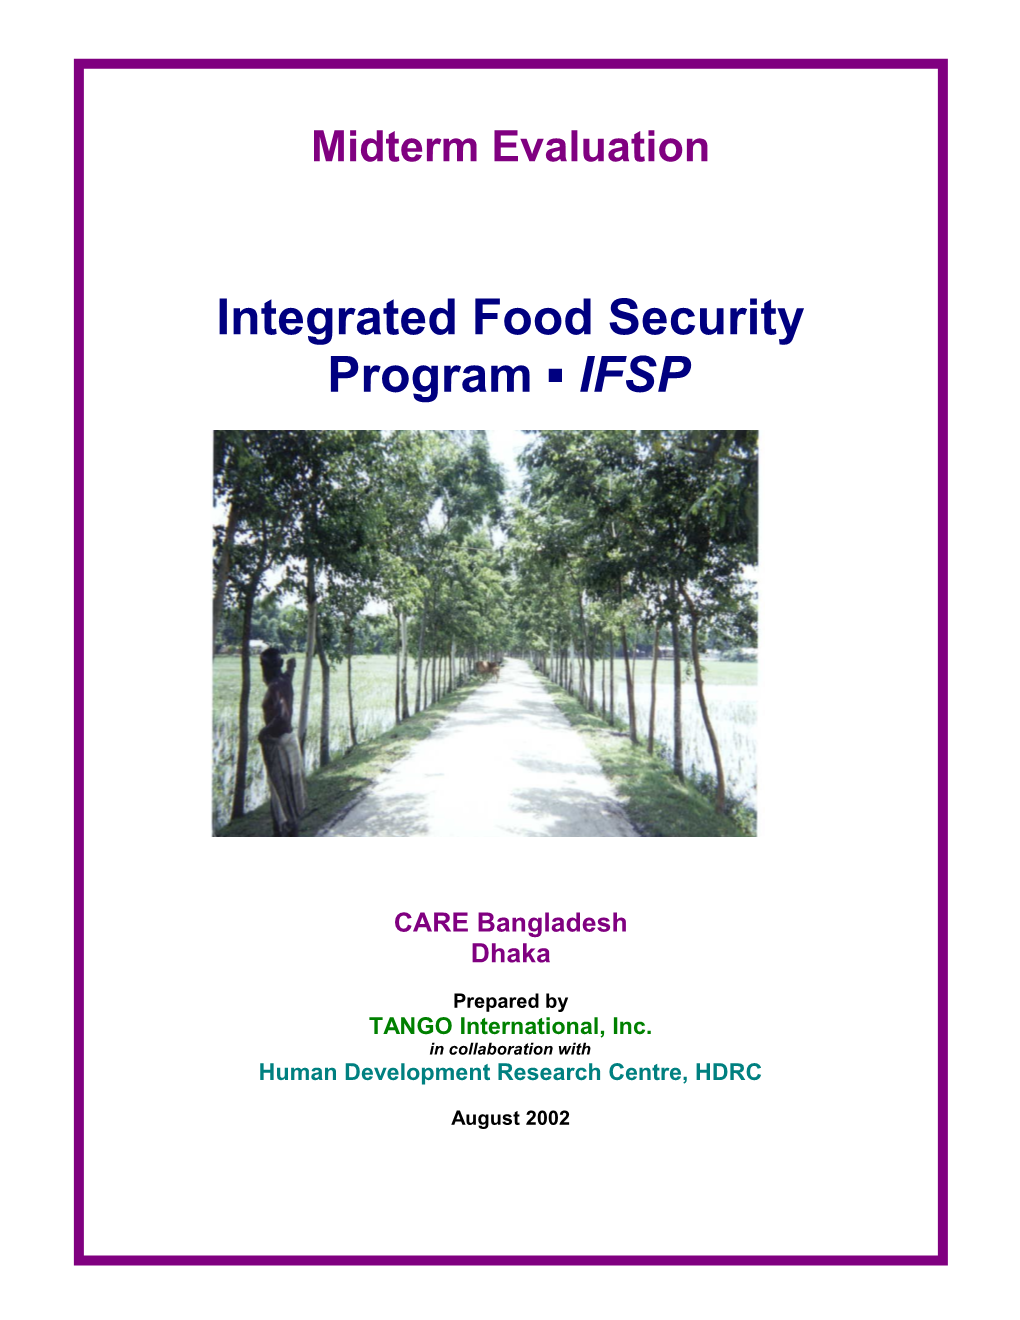 Integrated Food Security Program (Ifsp)